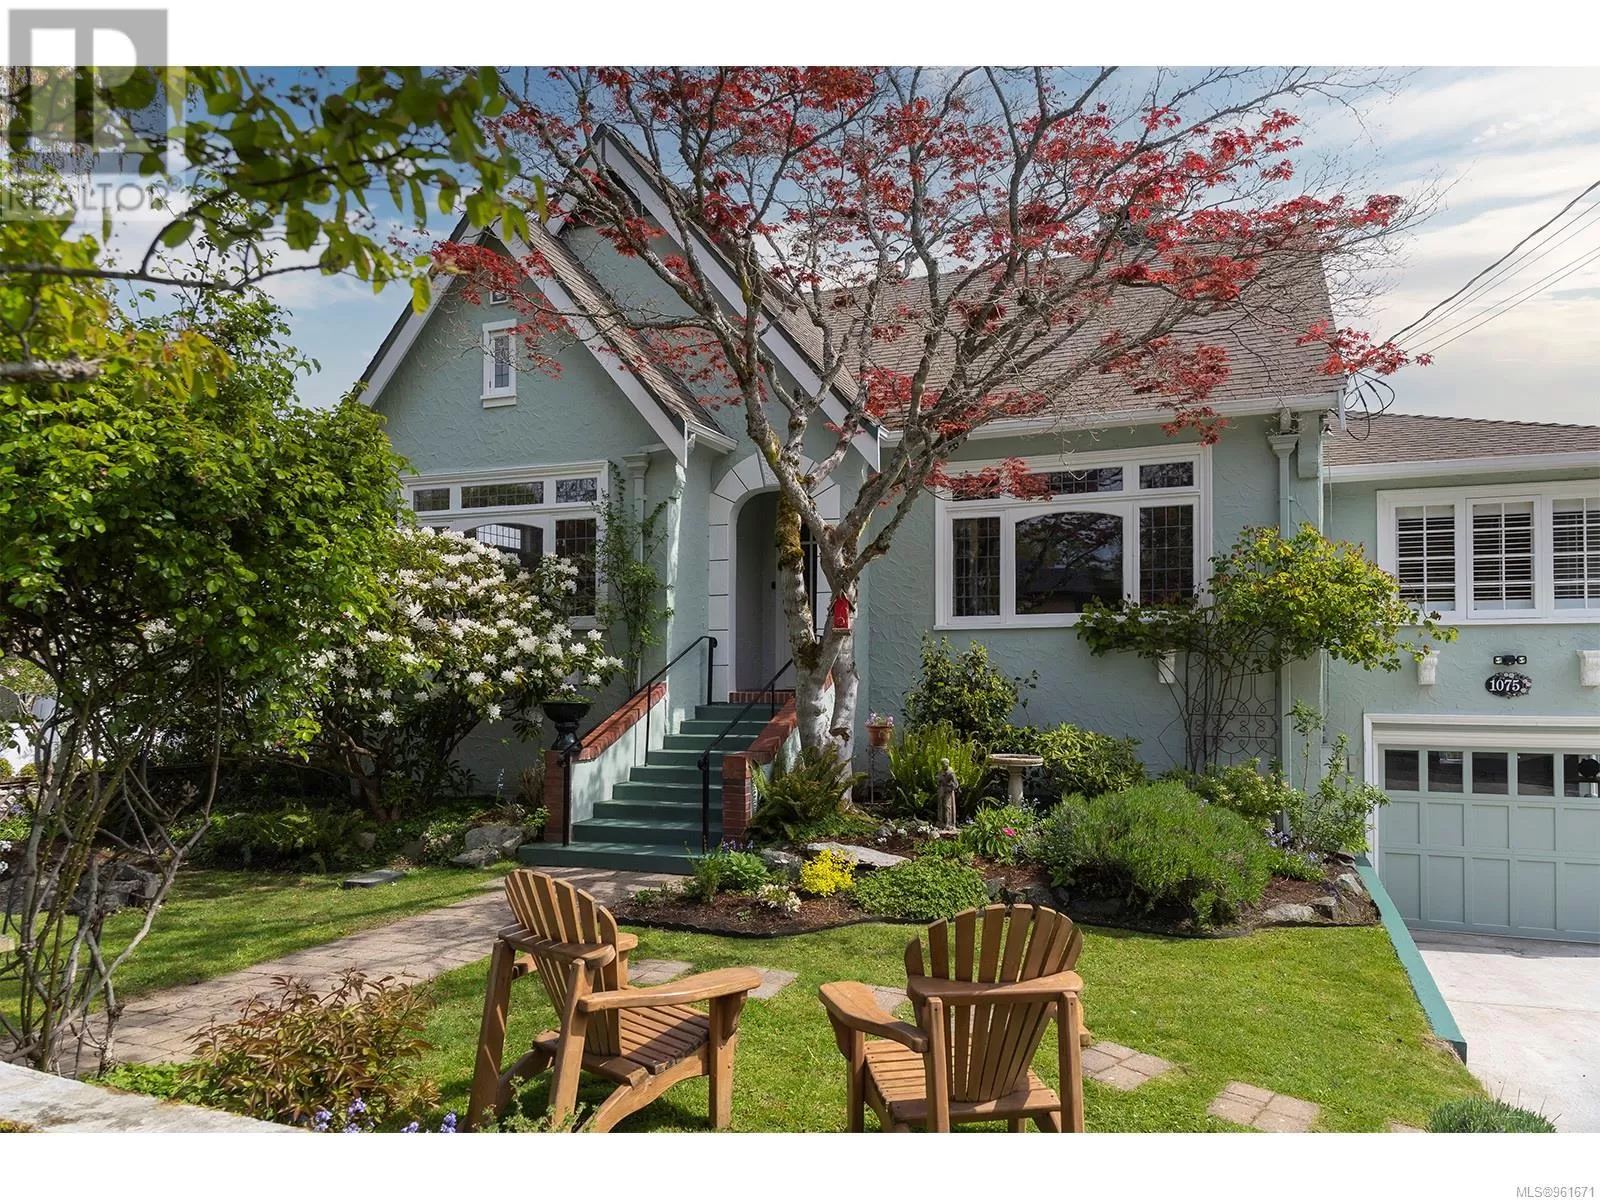 House for rent: 1075 St. David St, Oak Bay, British Columbia V8S 4Y7